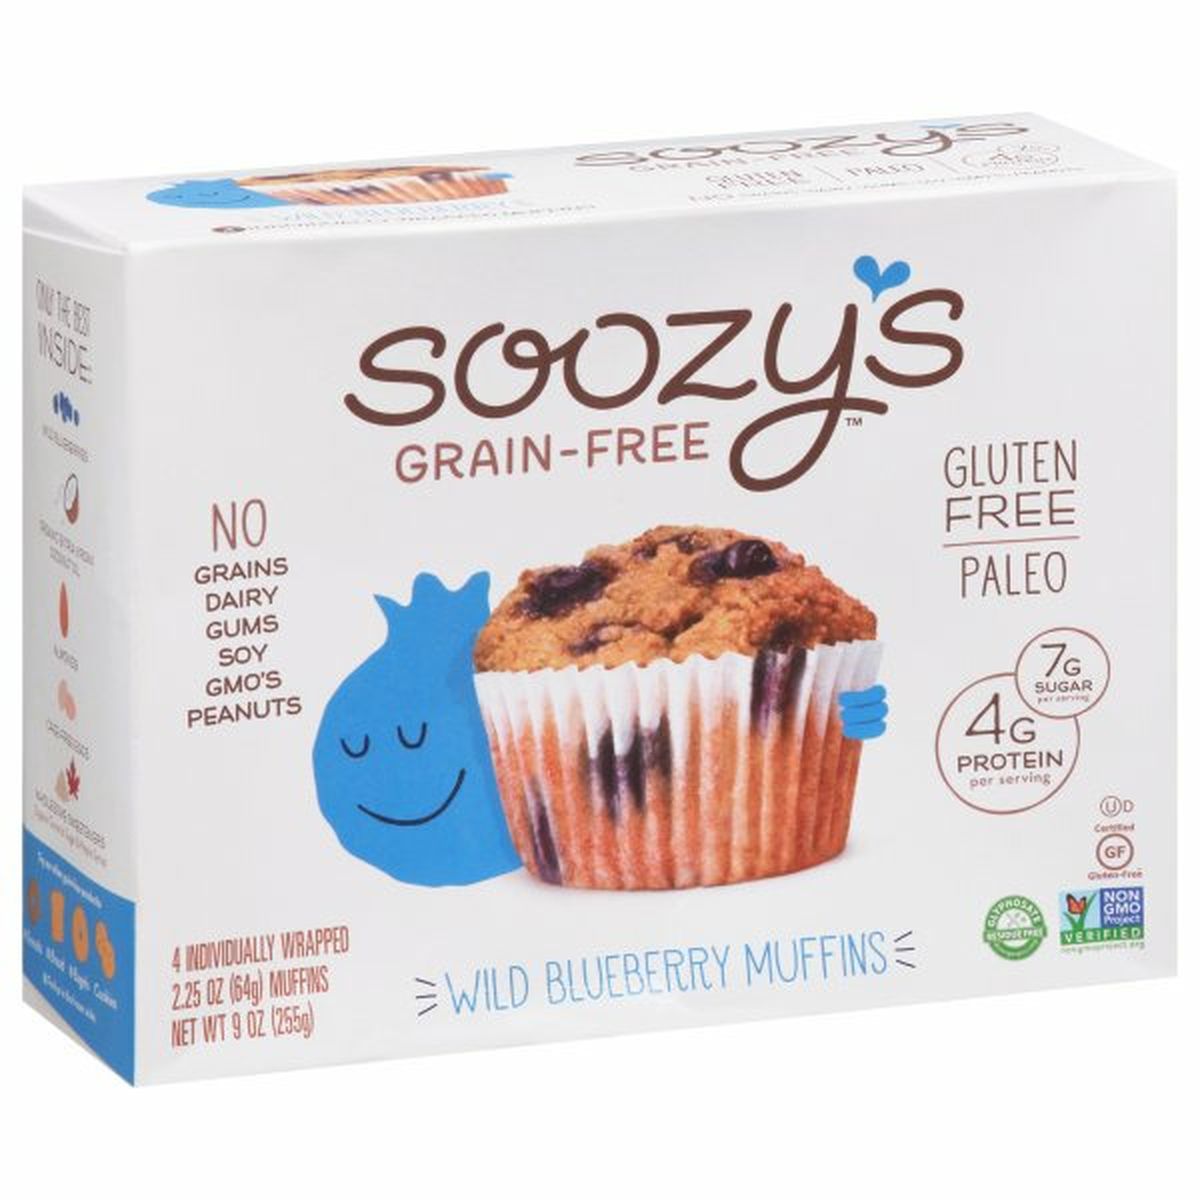 Calories in Soozy's Muffins, Grain-Free, Wild Blueberry